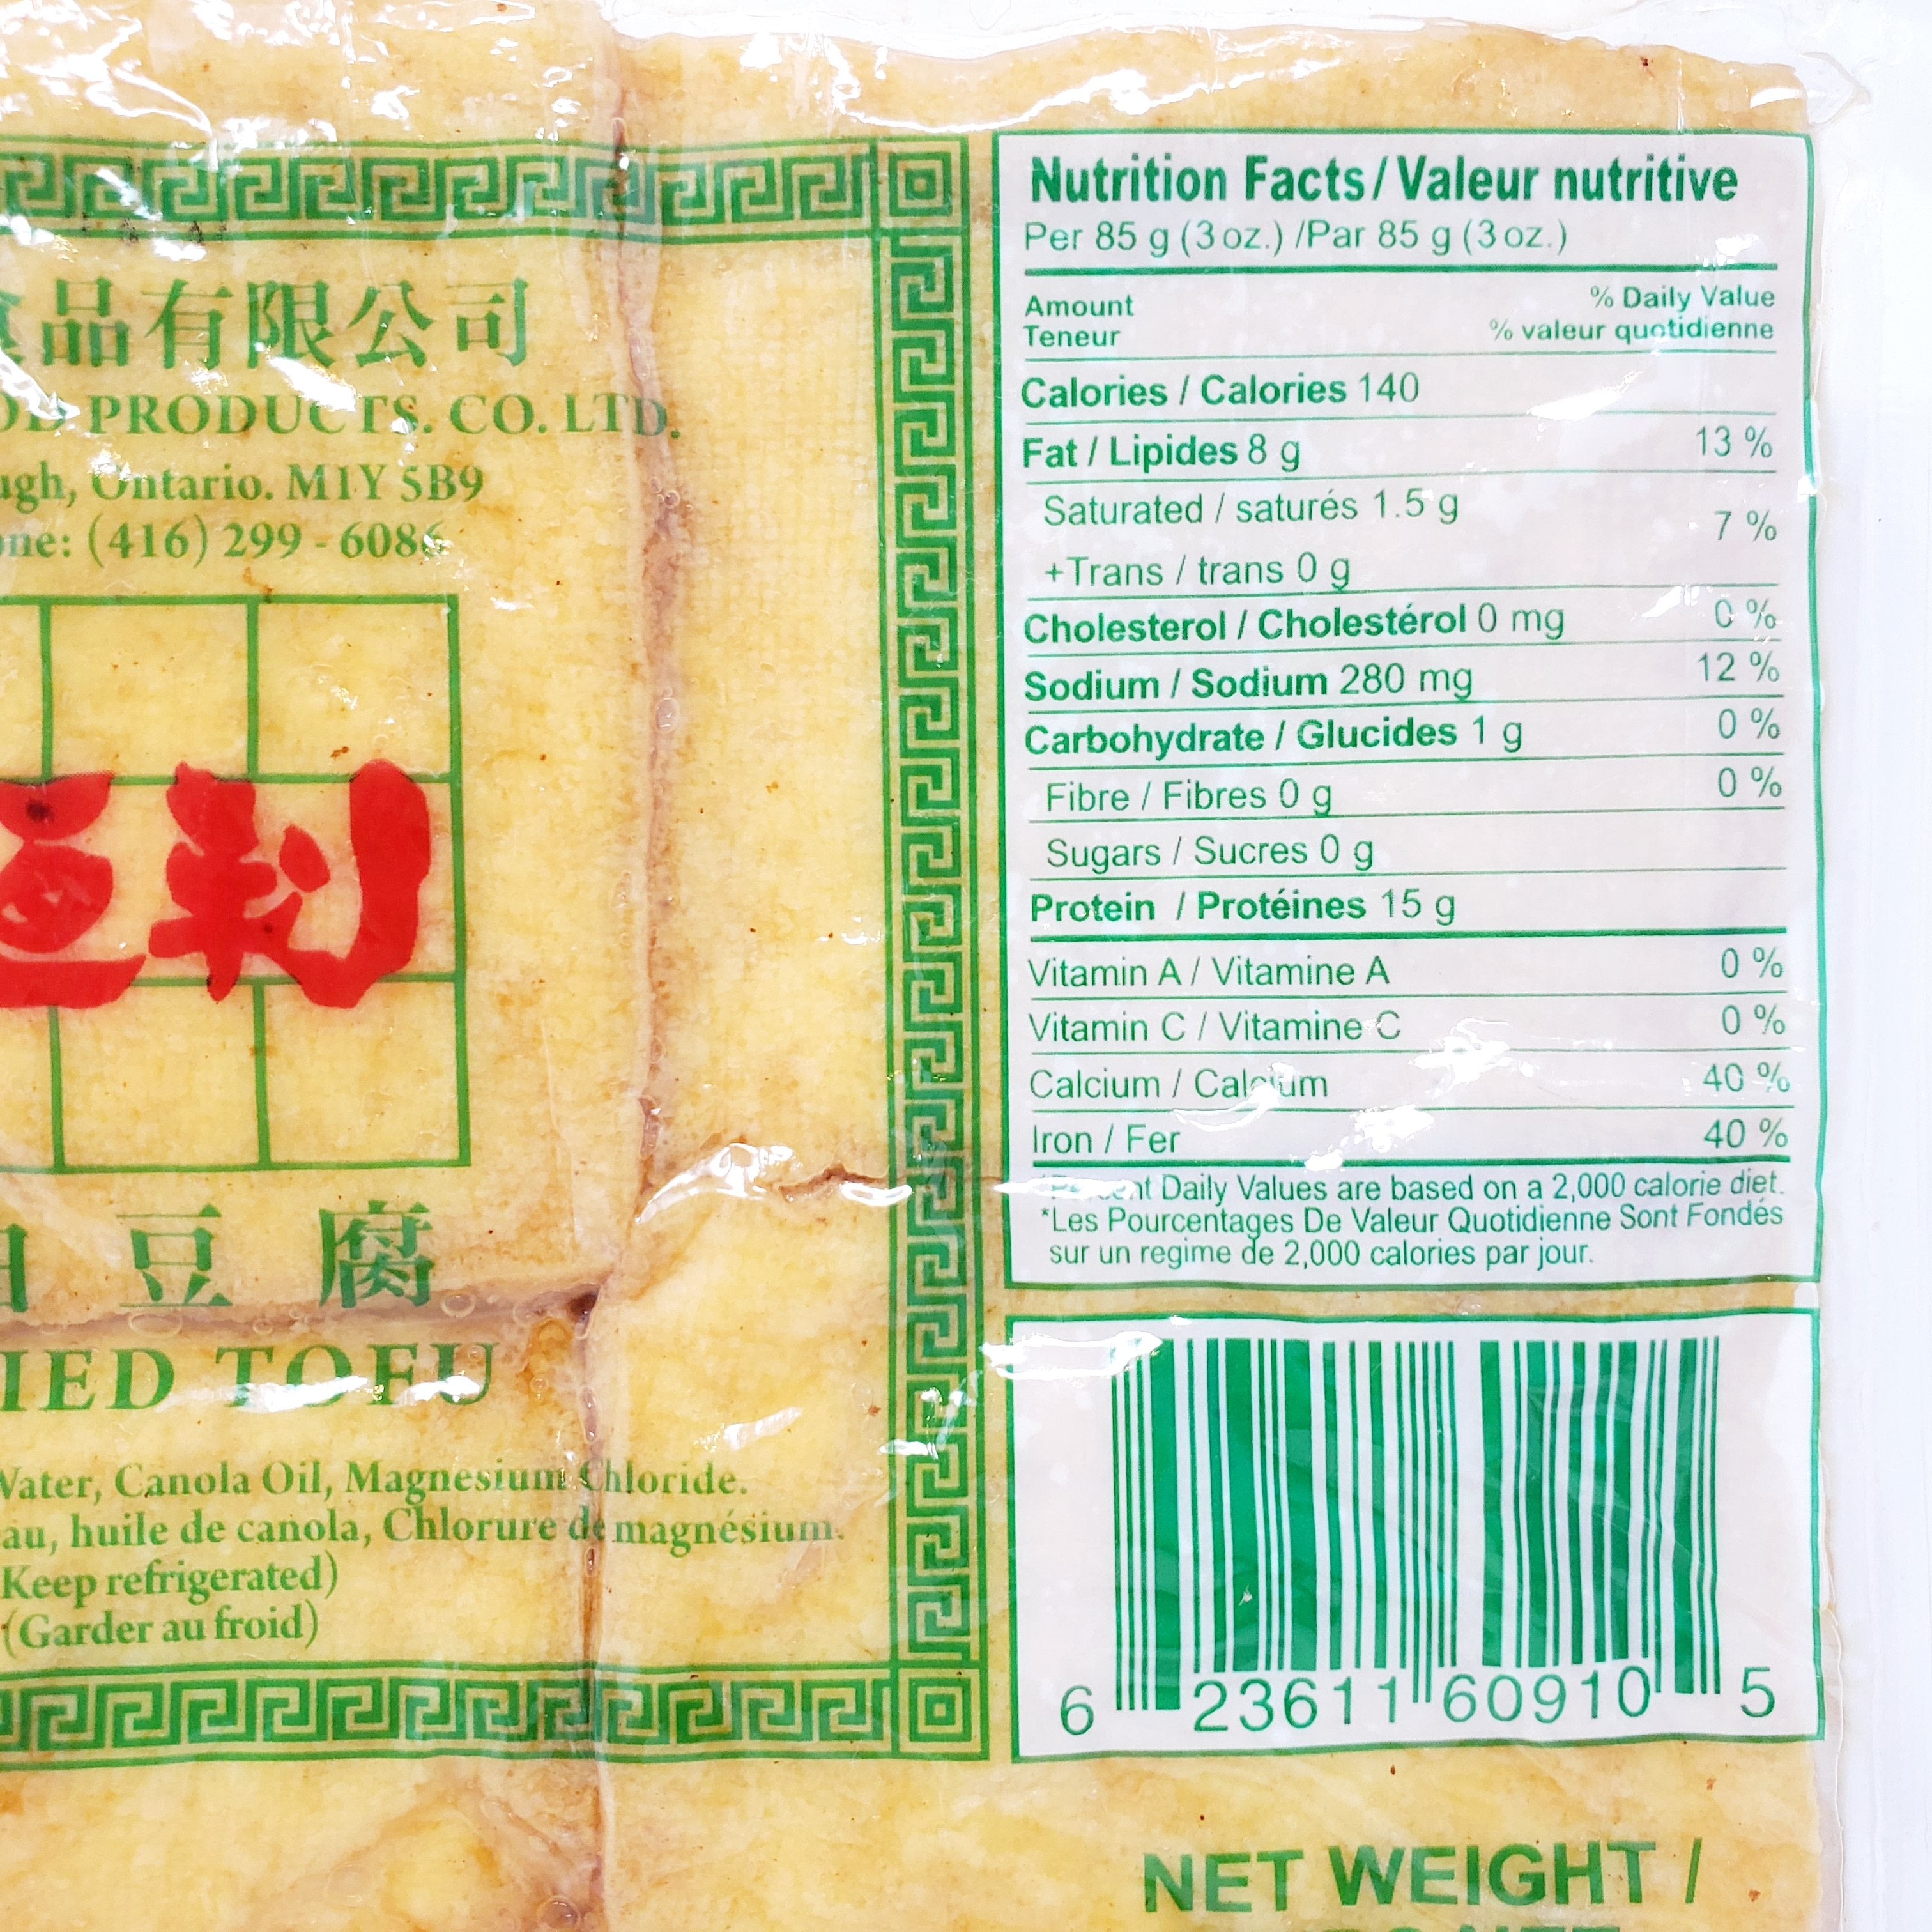 Heng Lee Oil Fried Tofu